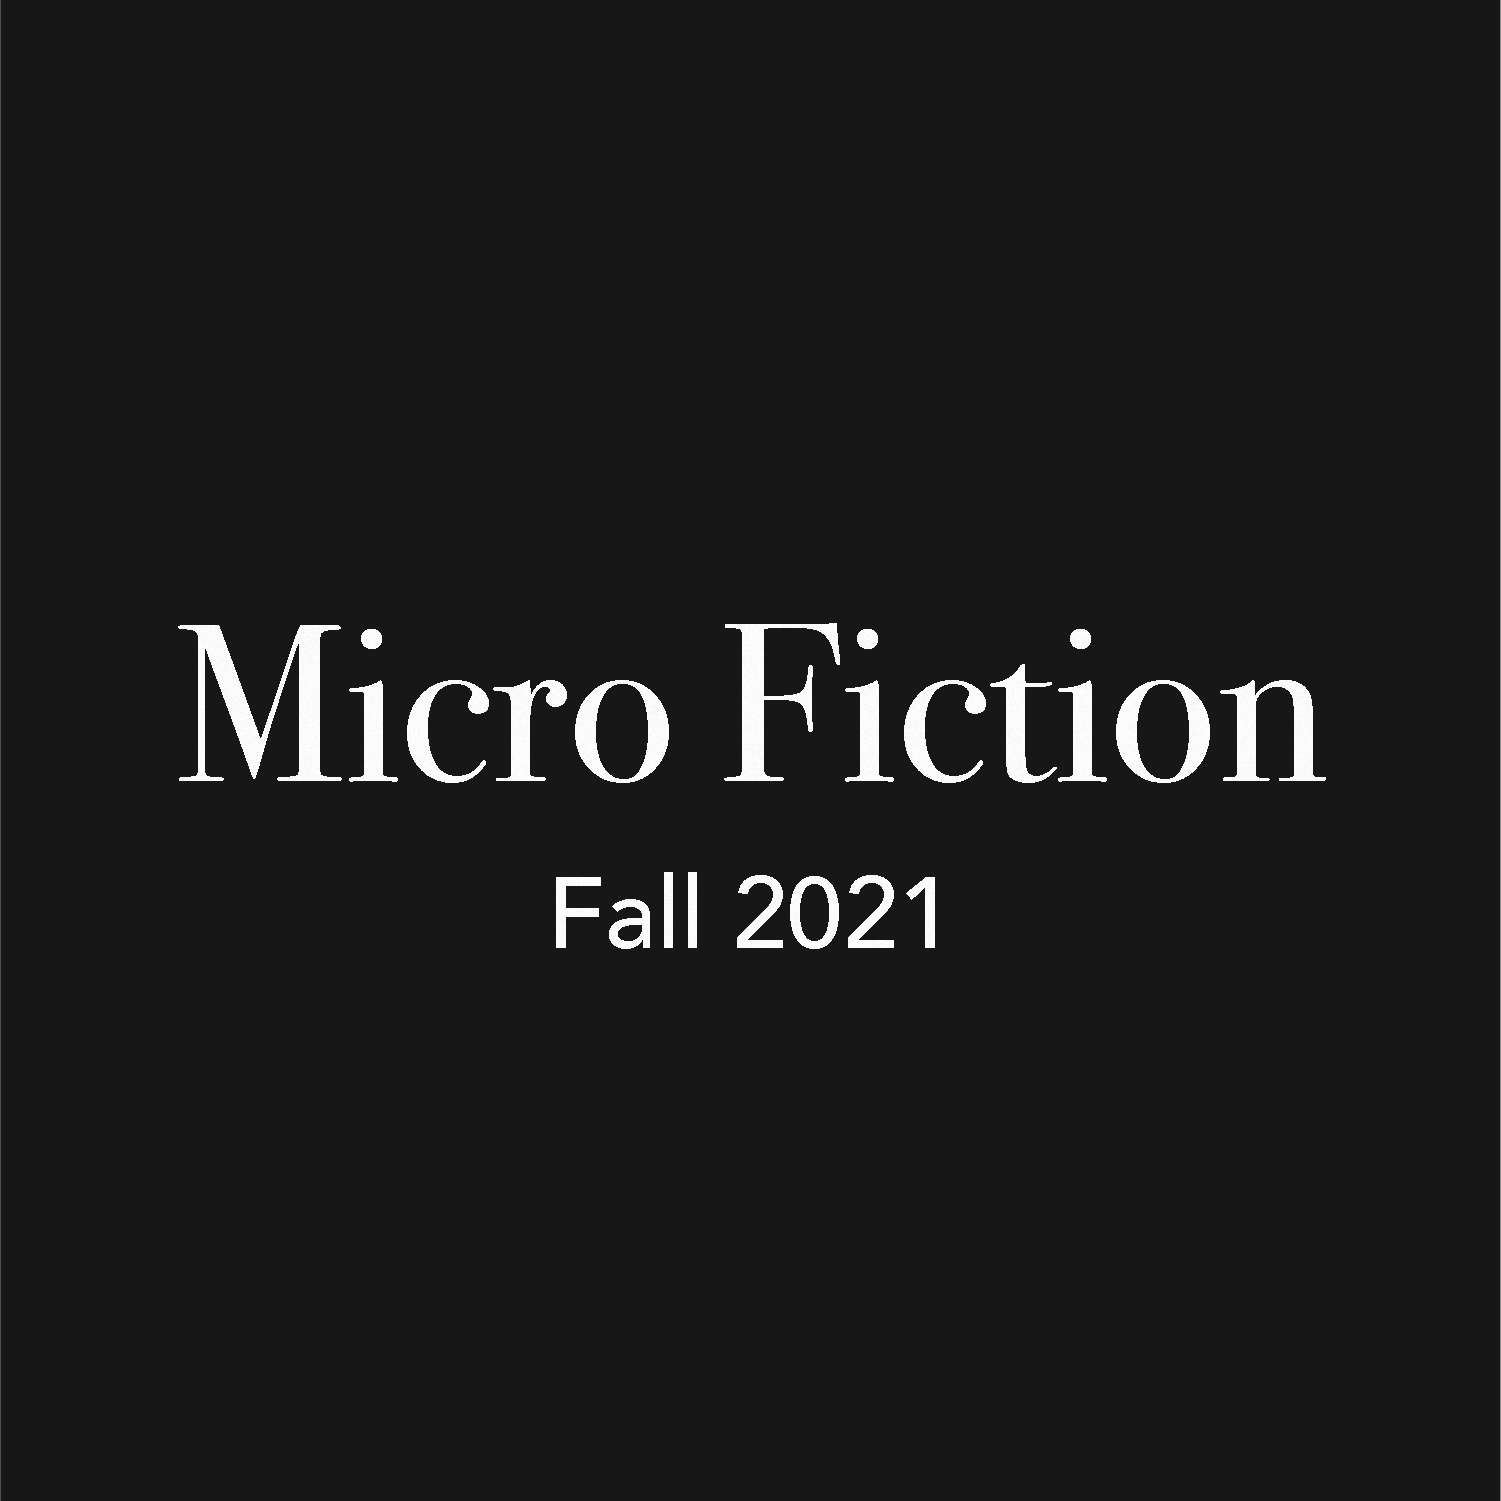 Micro Fiction Contest Fall 2021